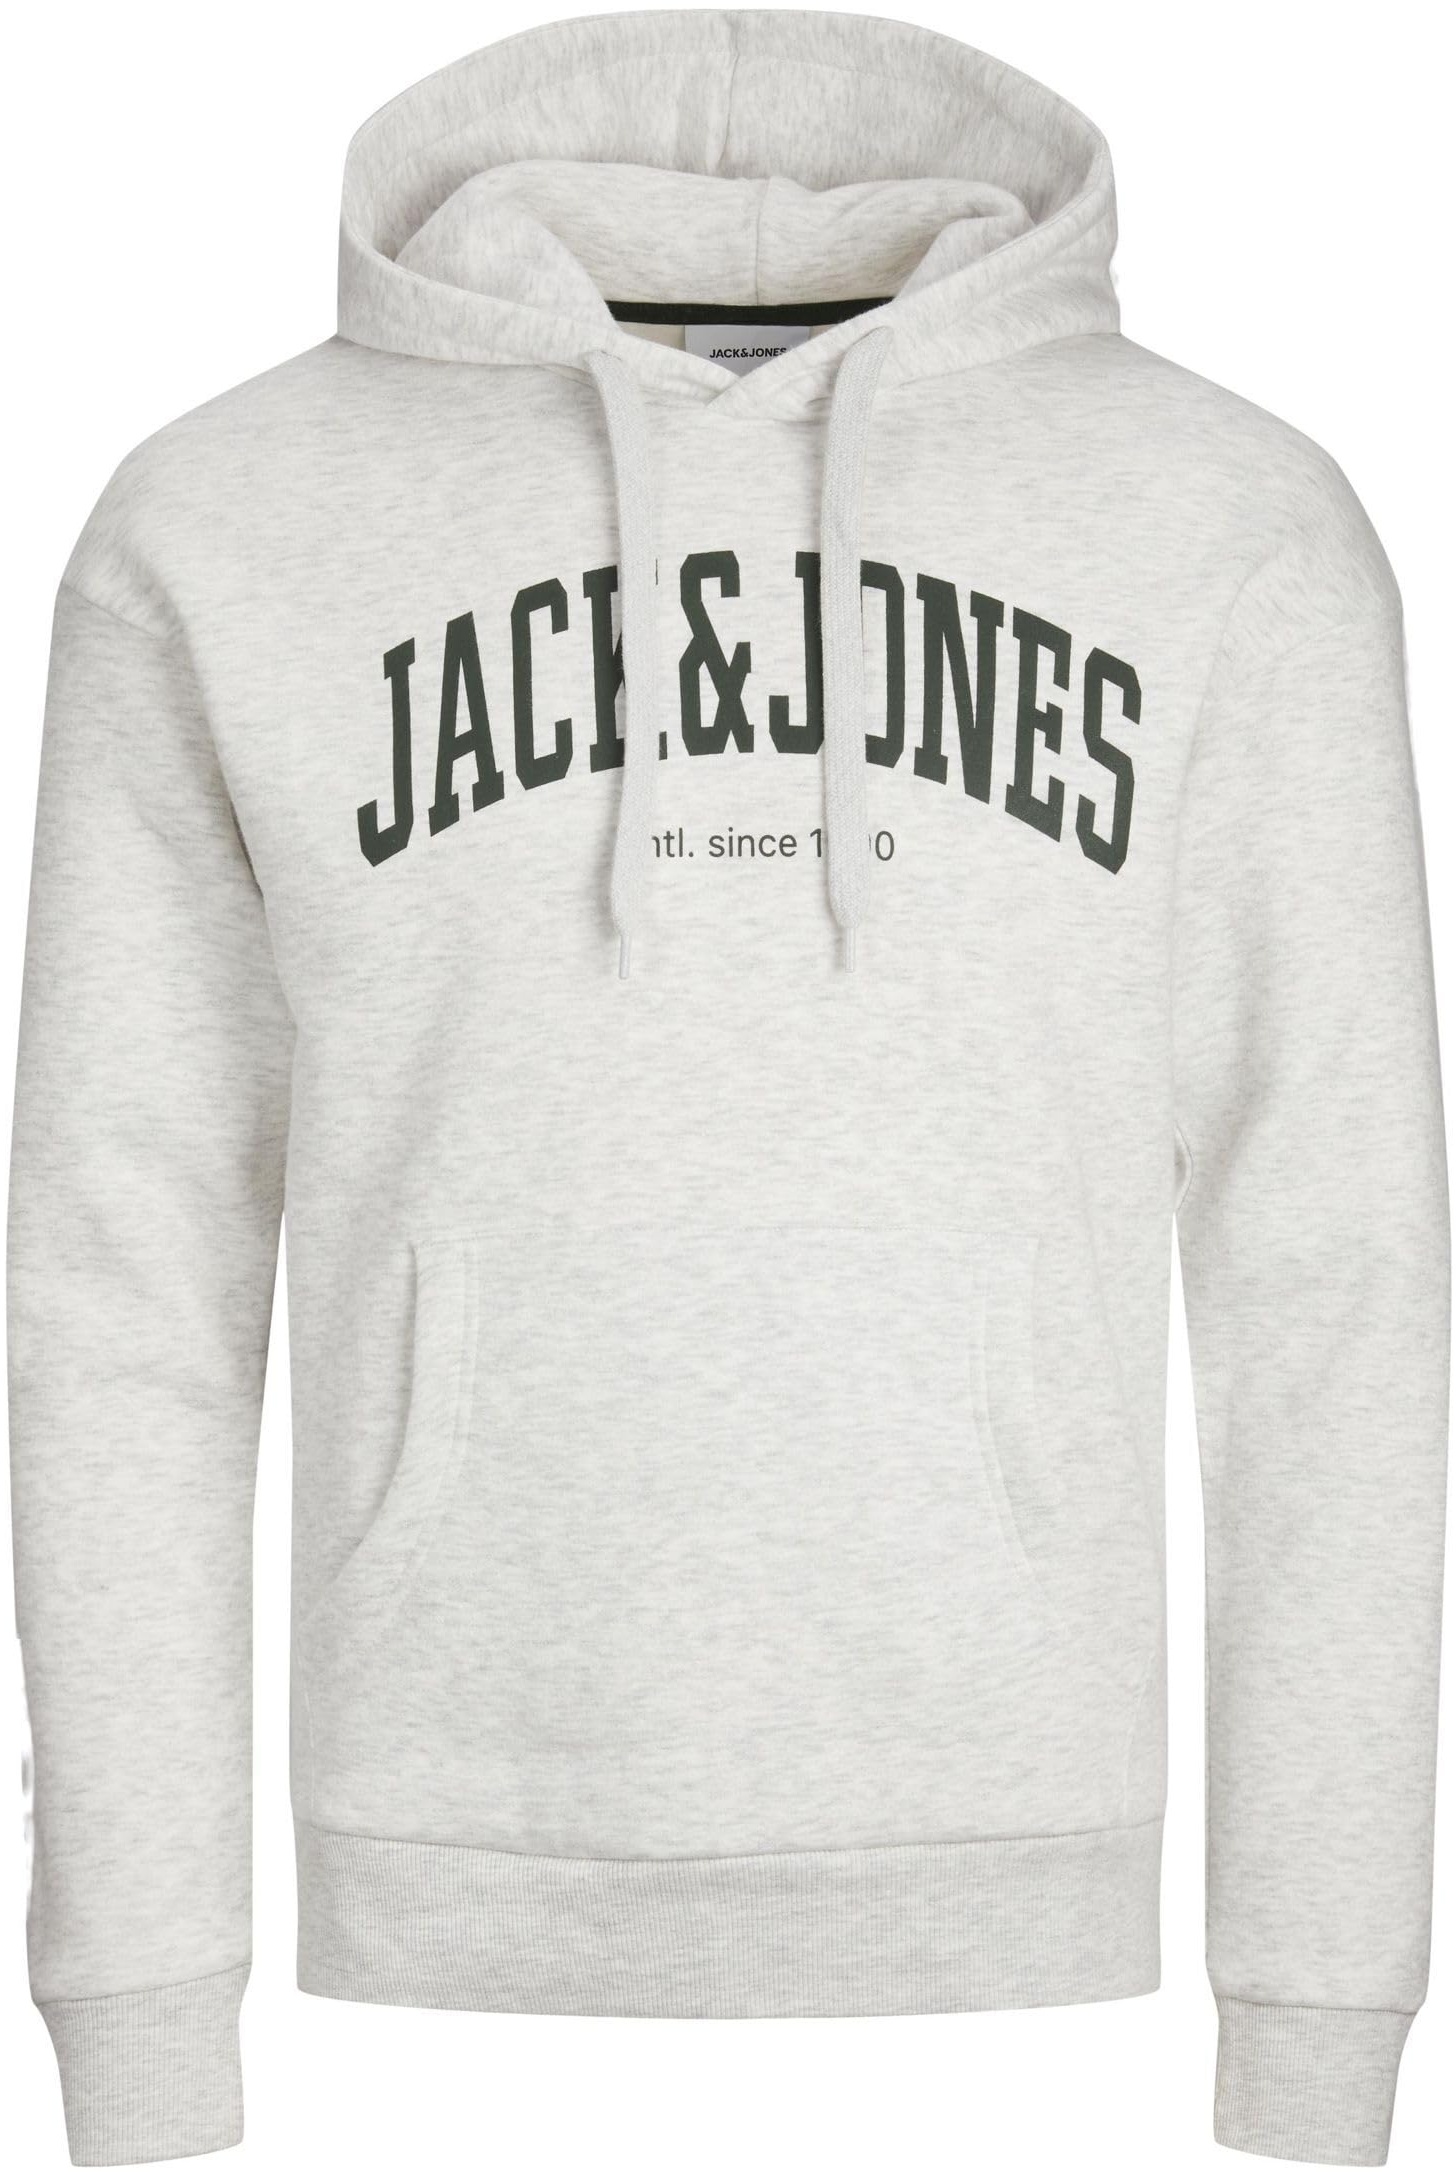 JACK & JONES Herren Logo Print Hoodie Basic Sweater Pullover Kapuzen Sweatshirt JJEJOSH